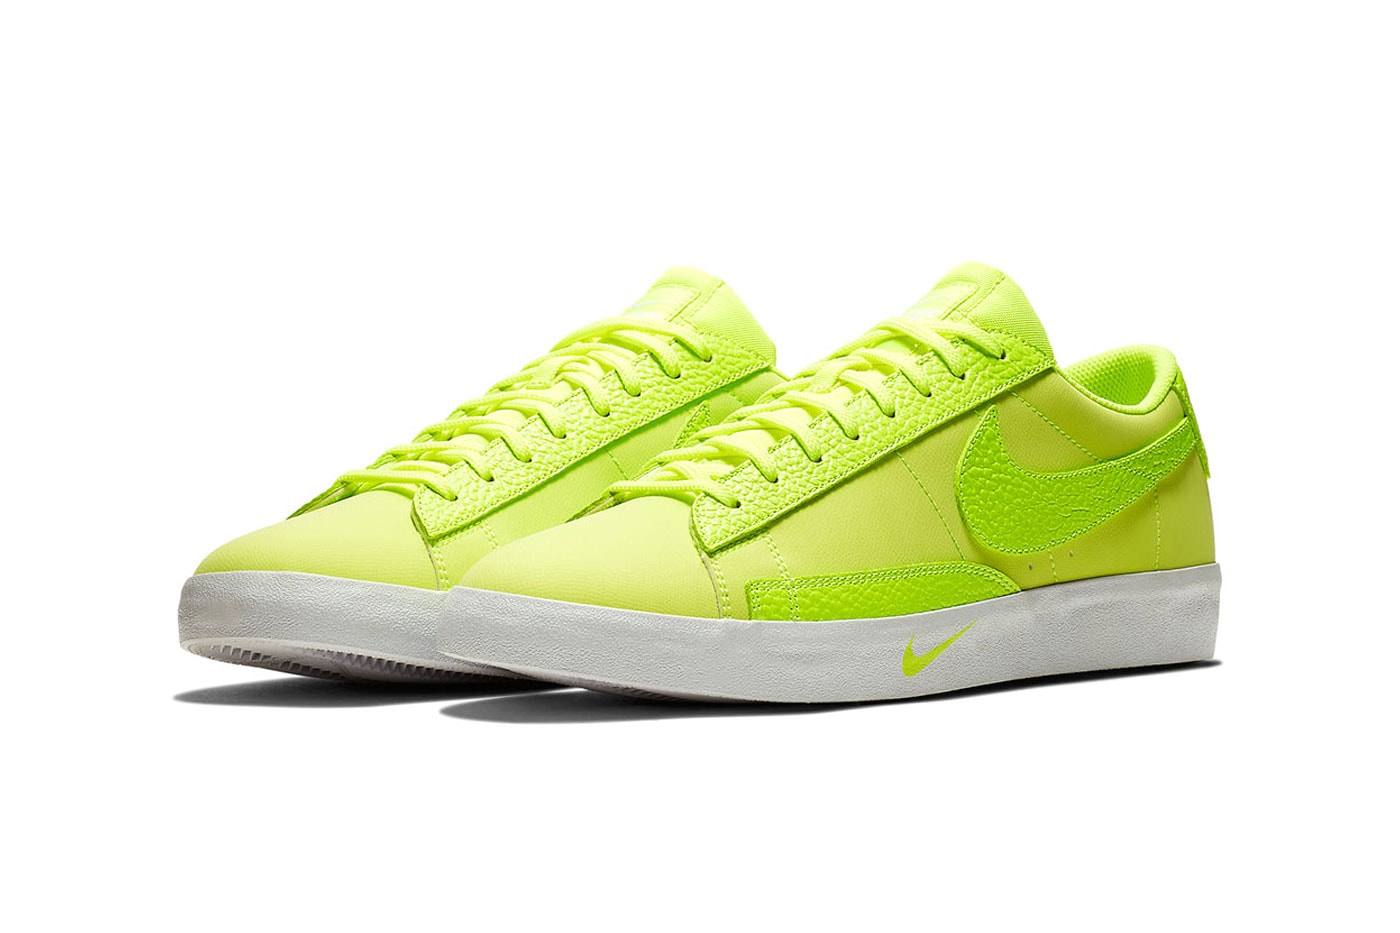 Nike Blazer Low Volt sneaker show bright neon swoosh